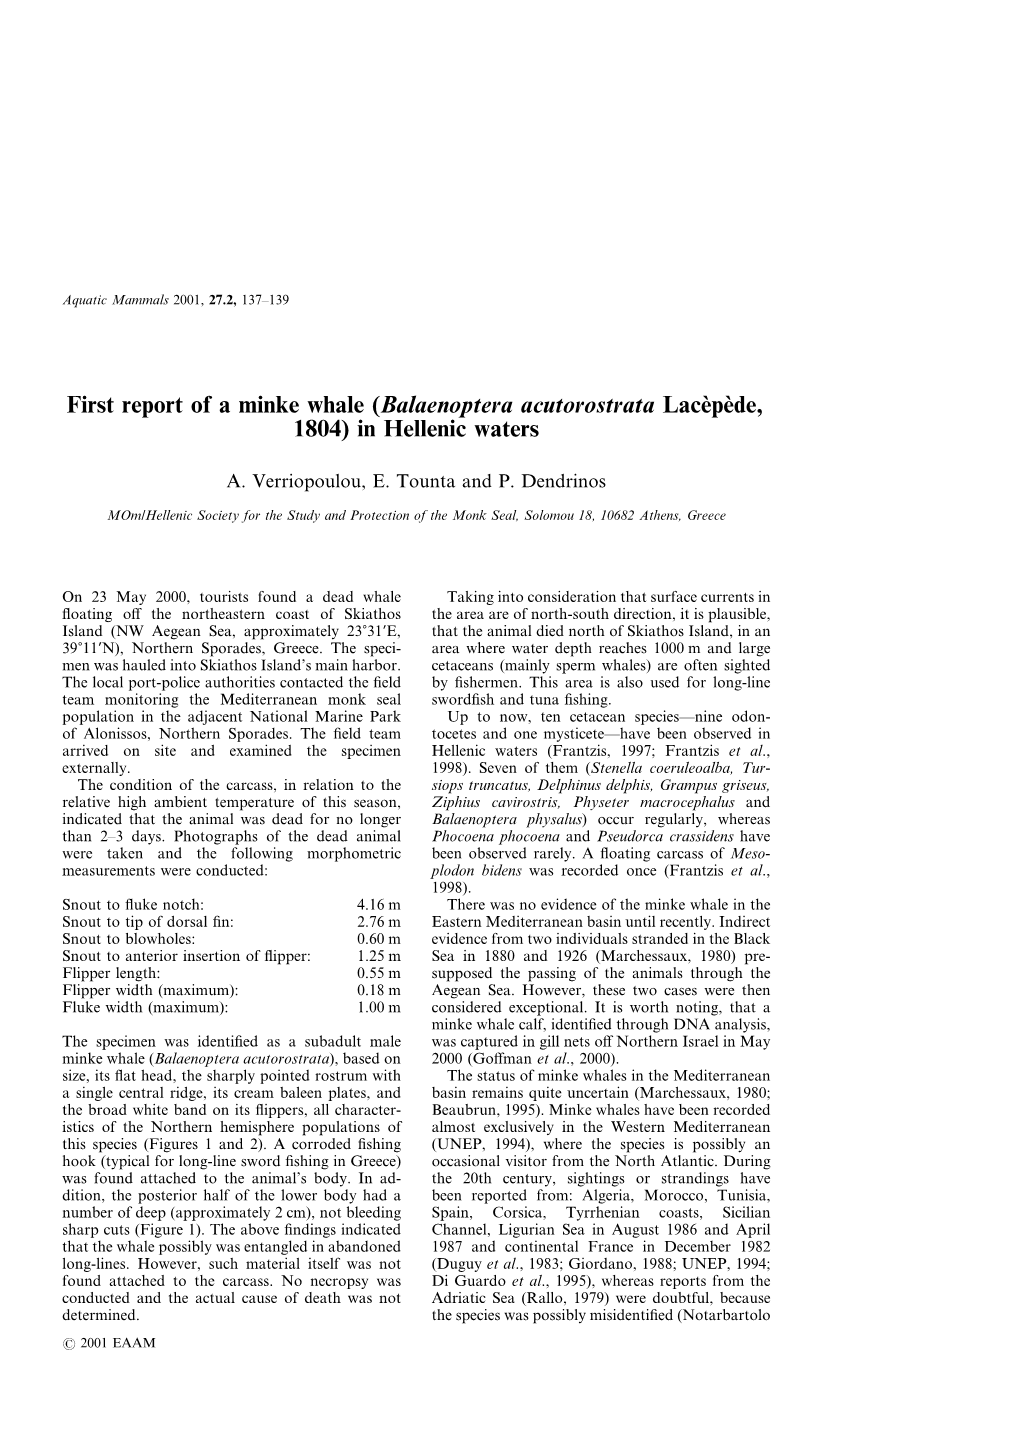 First Report of a Minke Whale (Balaenoptera Acutorostrata Lacèpède, 1804) in Hellenic Waters